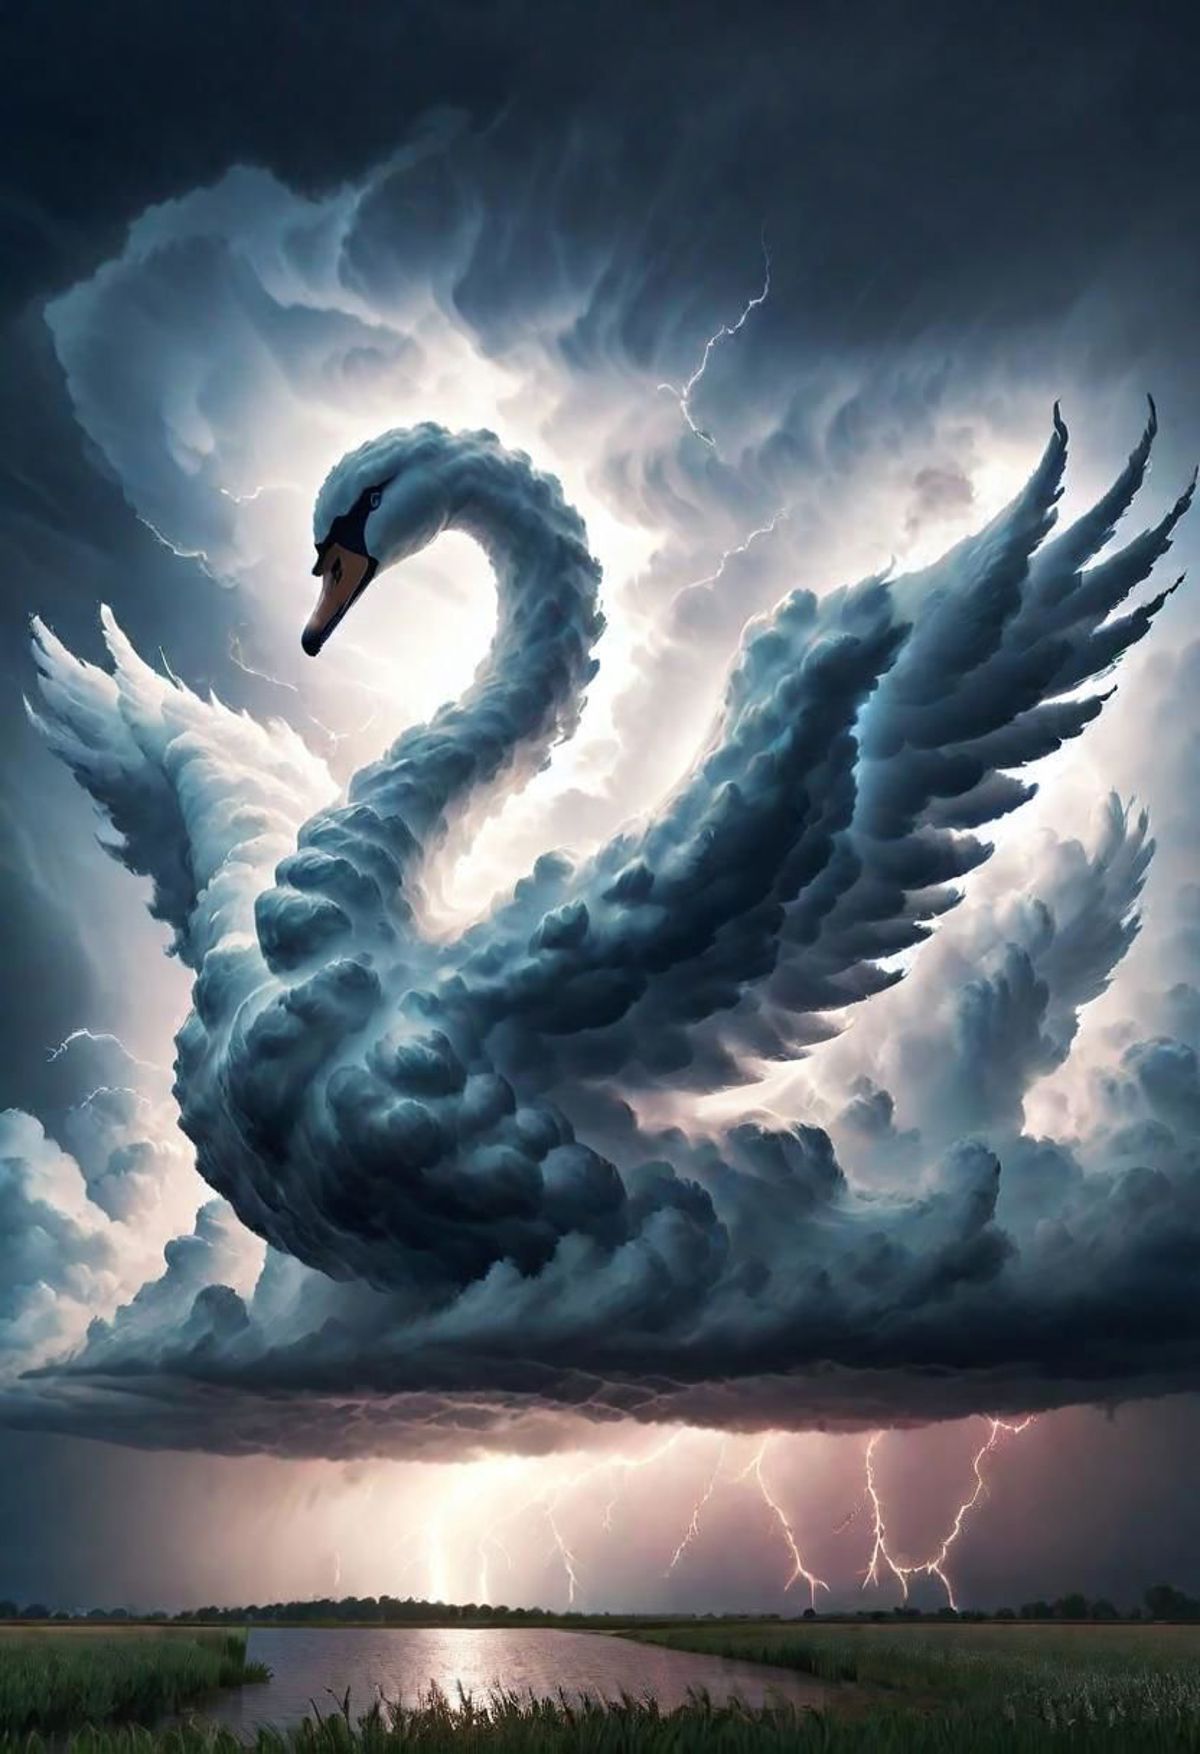 A Swan Flying Through a Cloudy Sky